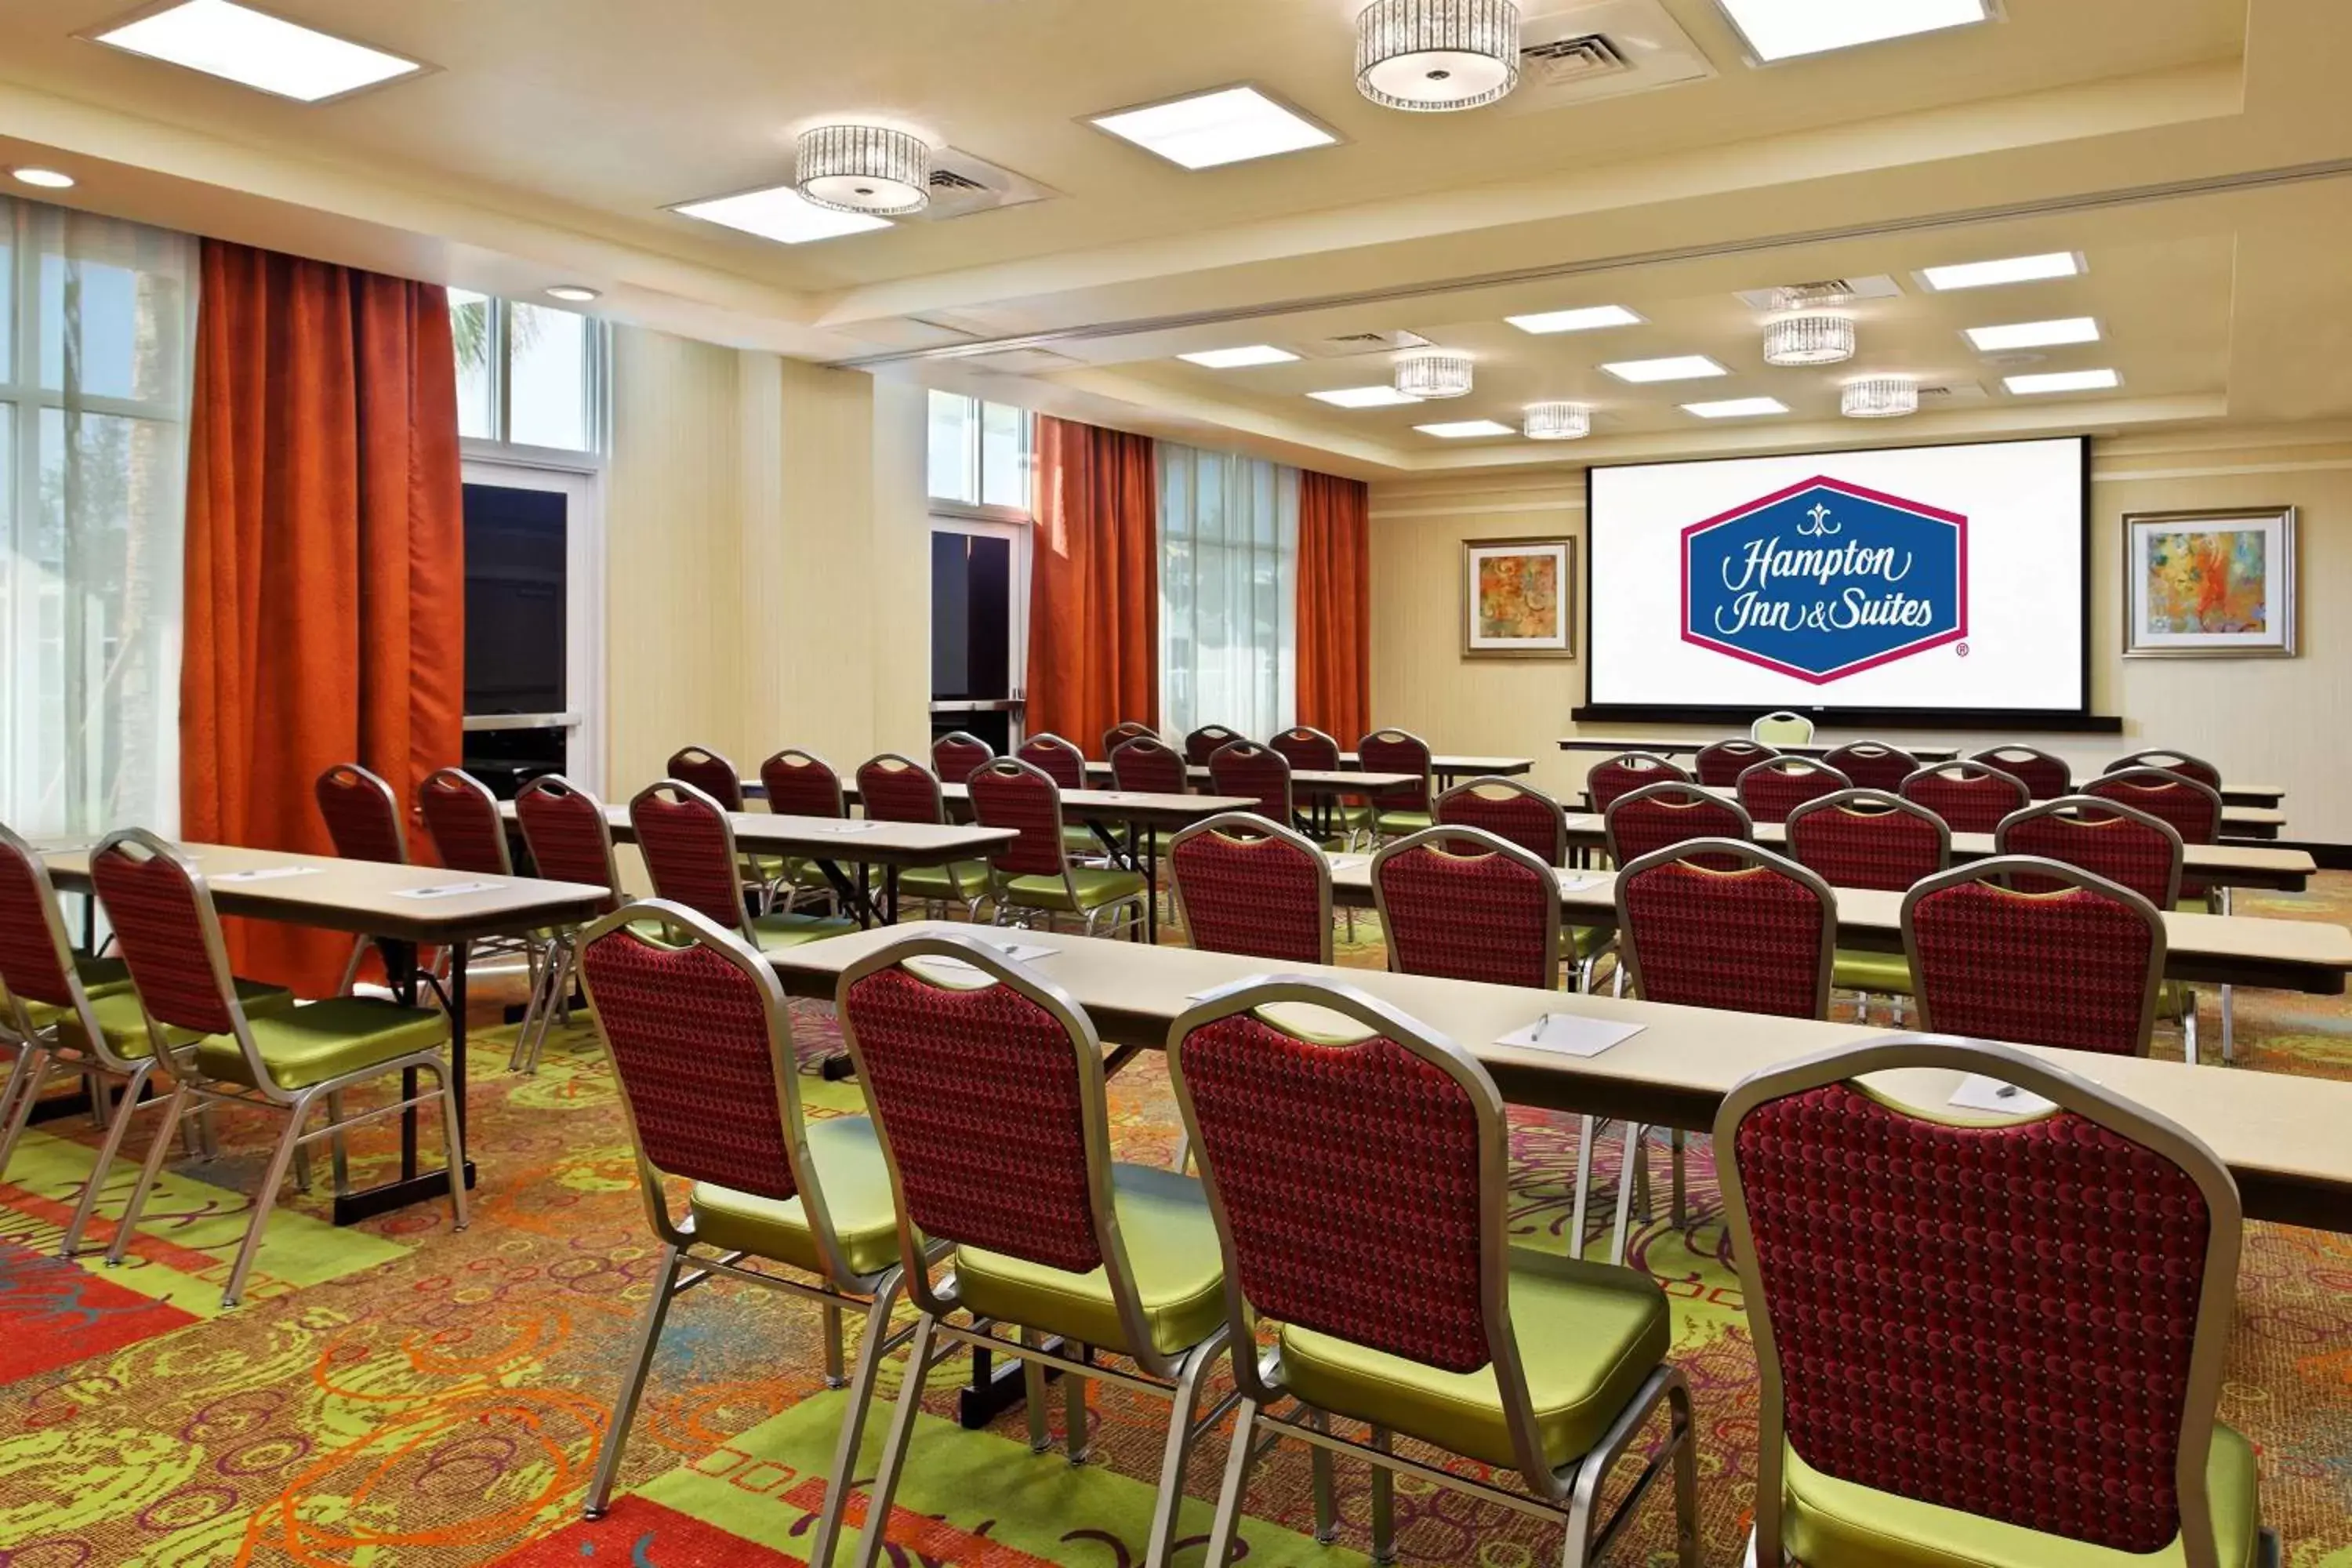 Meeting/conference room in Hampton Inn & Suites Orlando North Altamonte Springs